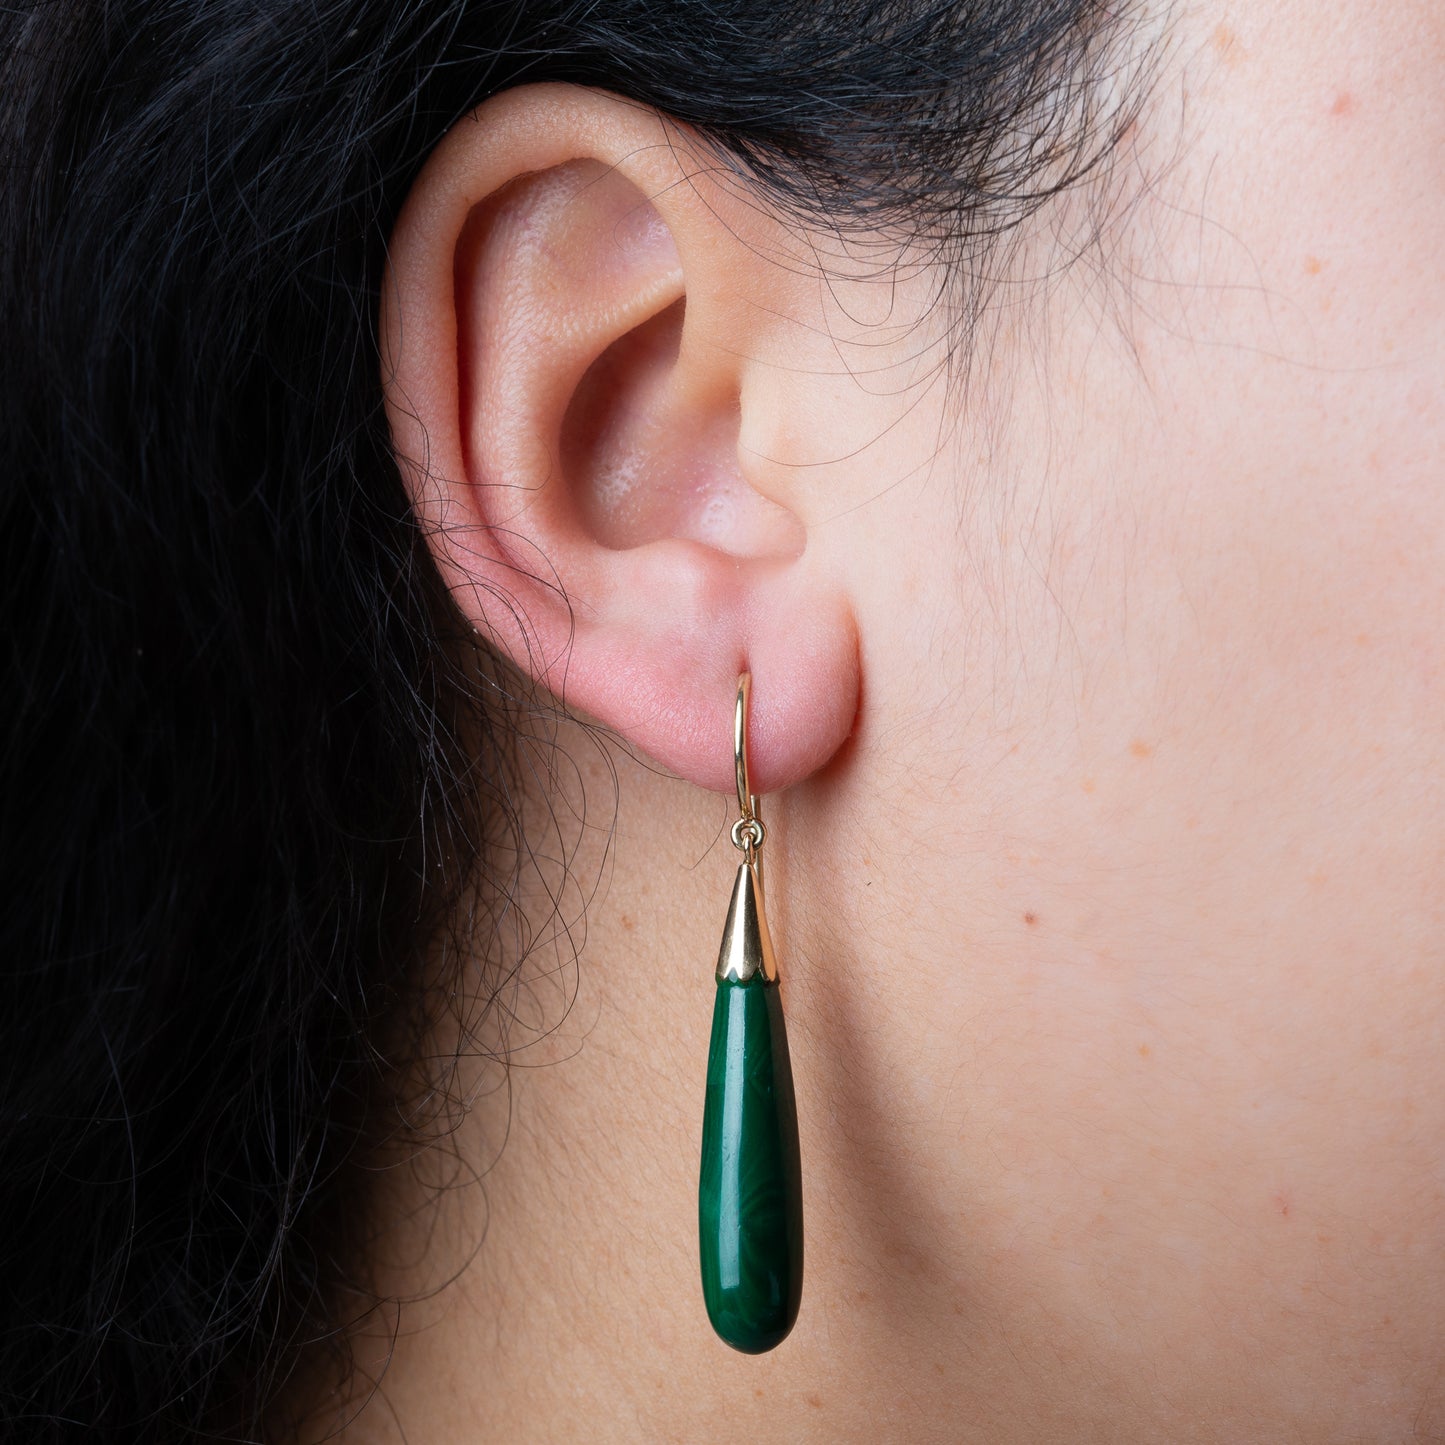 Antique malachite earrings